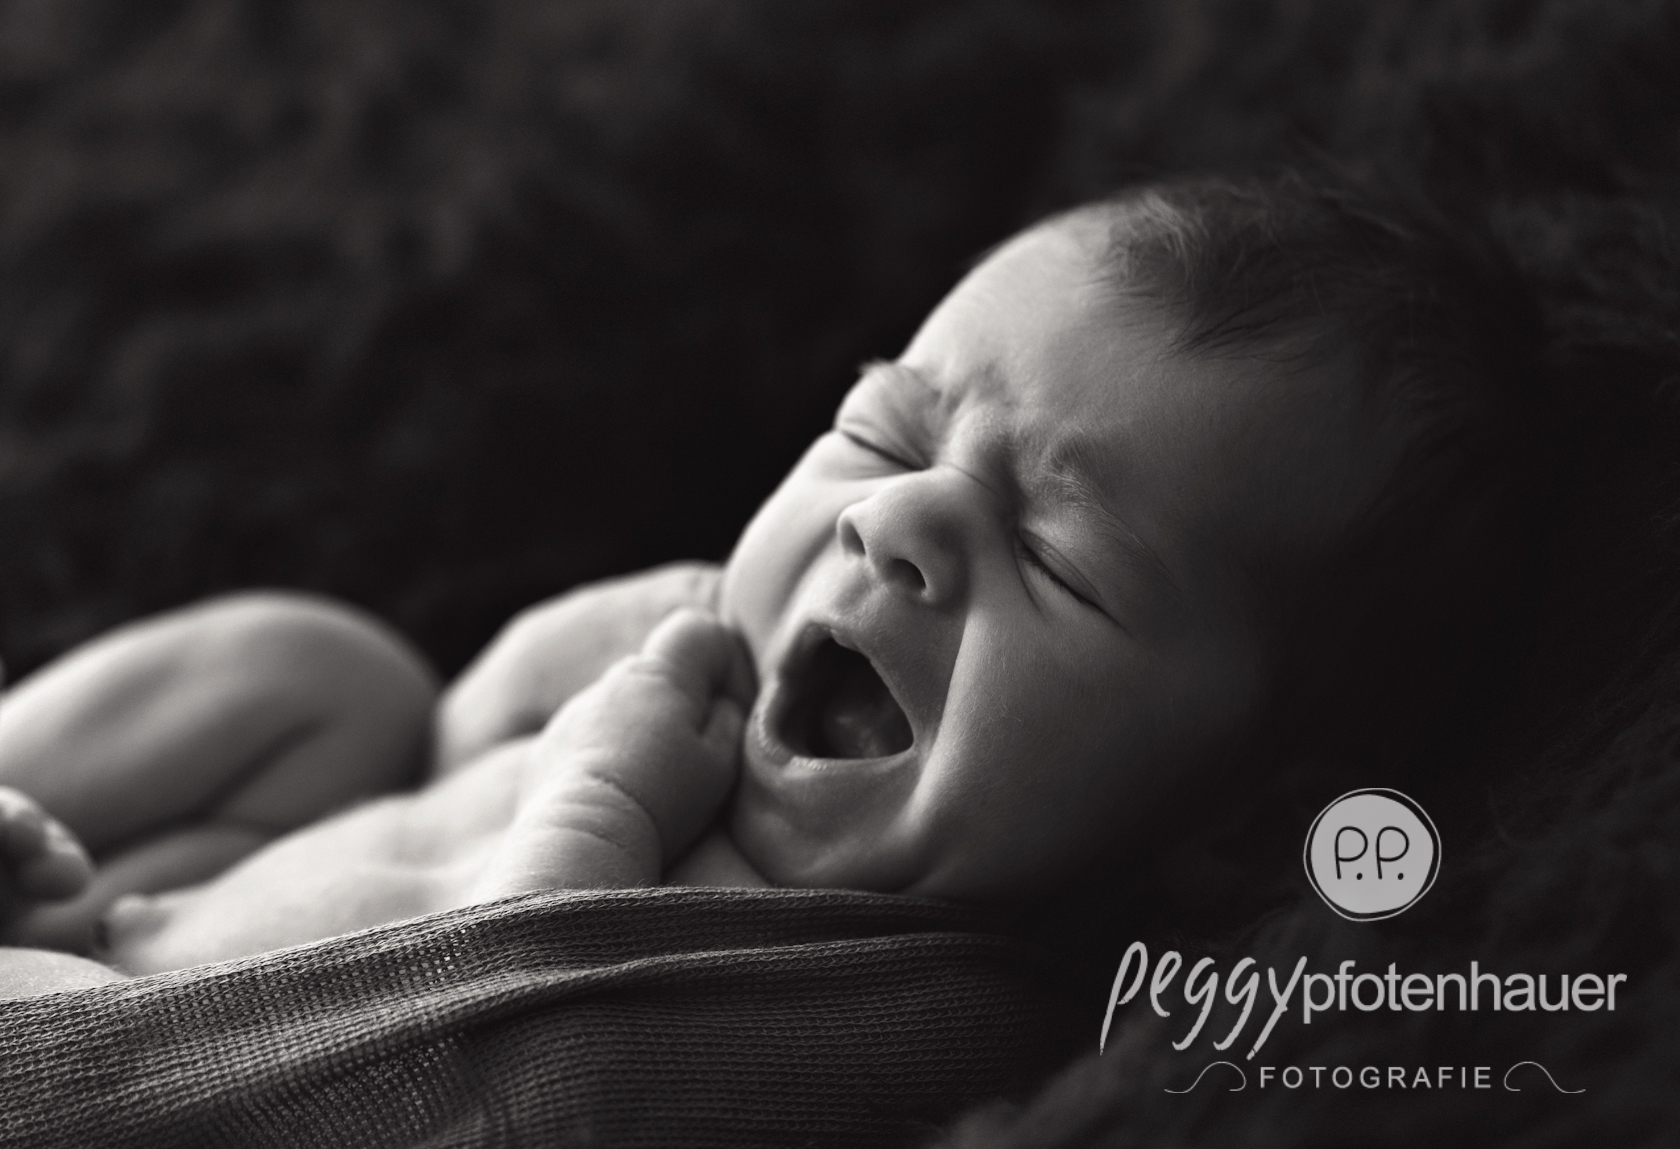 Neugeborenenbilder Peggy Pfotenhauer Fotografie